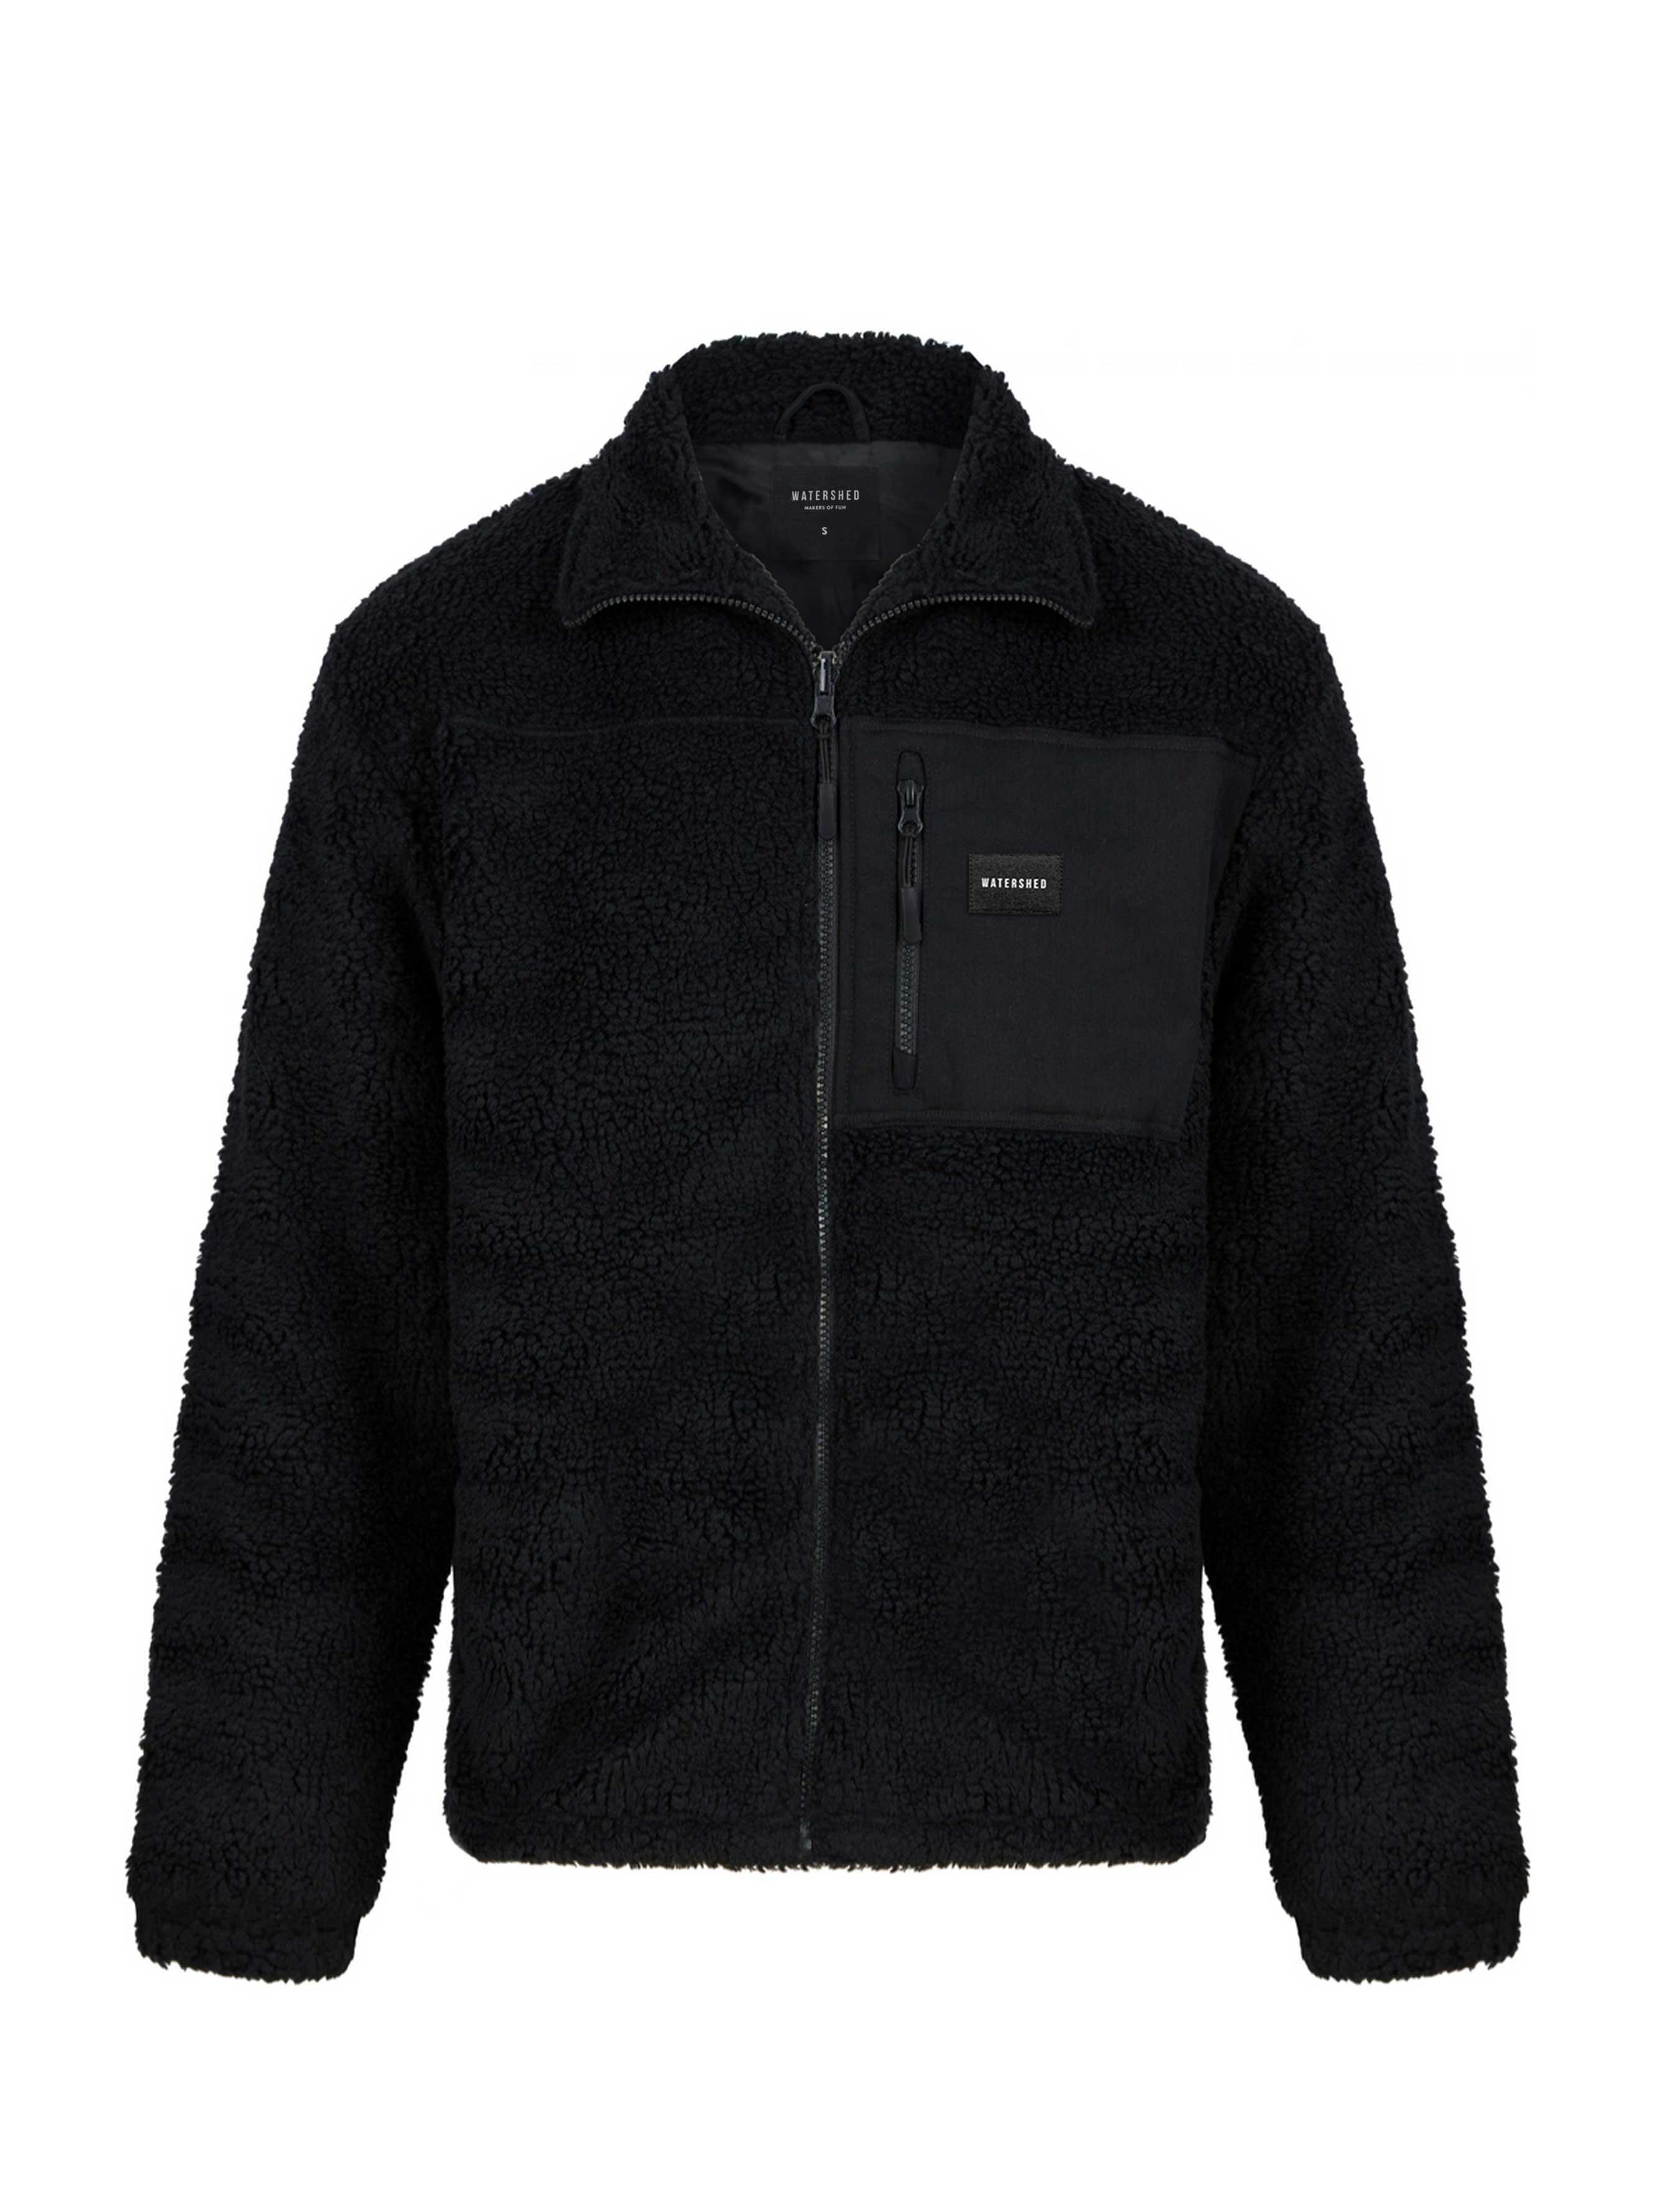 Vertex Fleece Jacket - Black - Watershed Brand